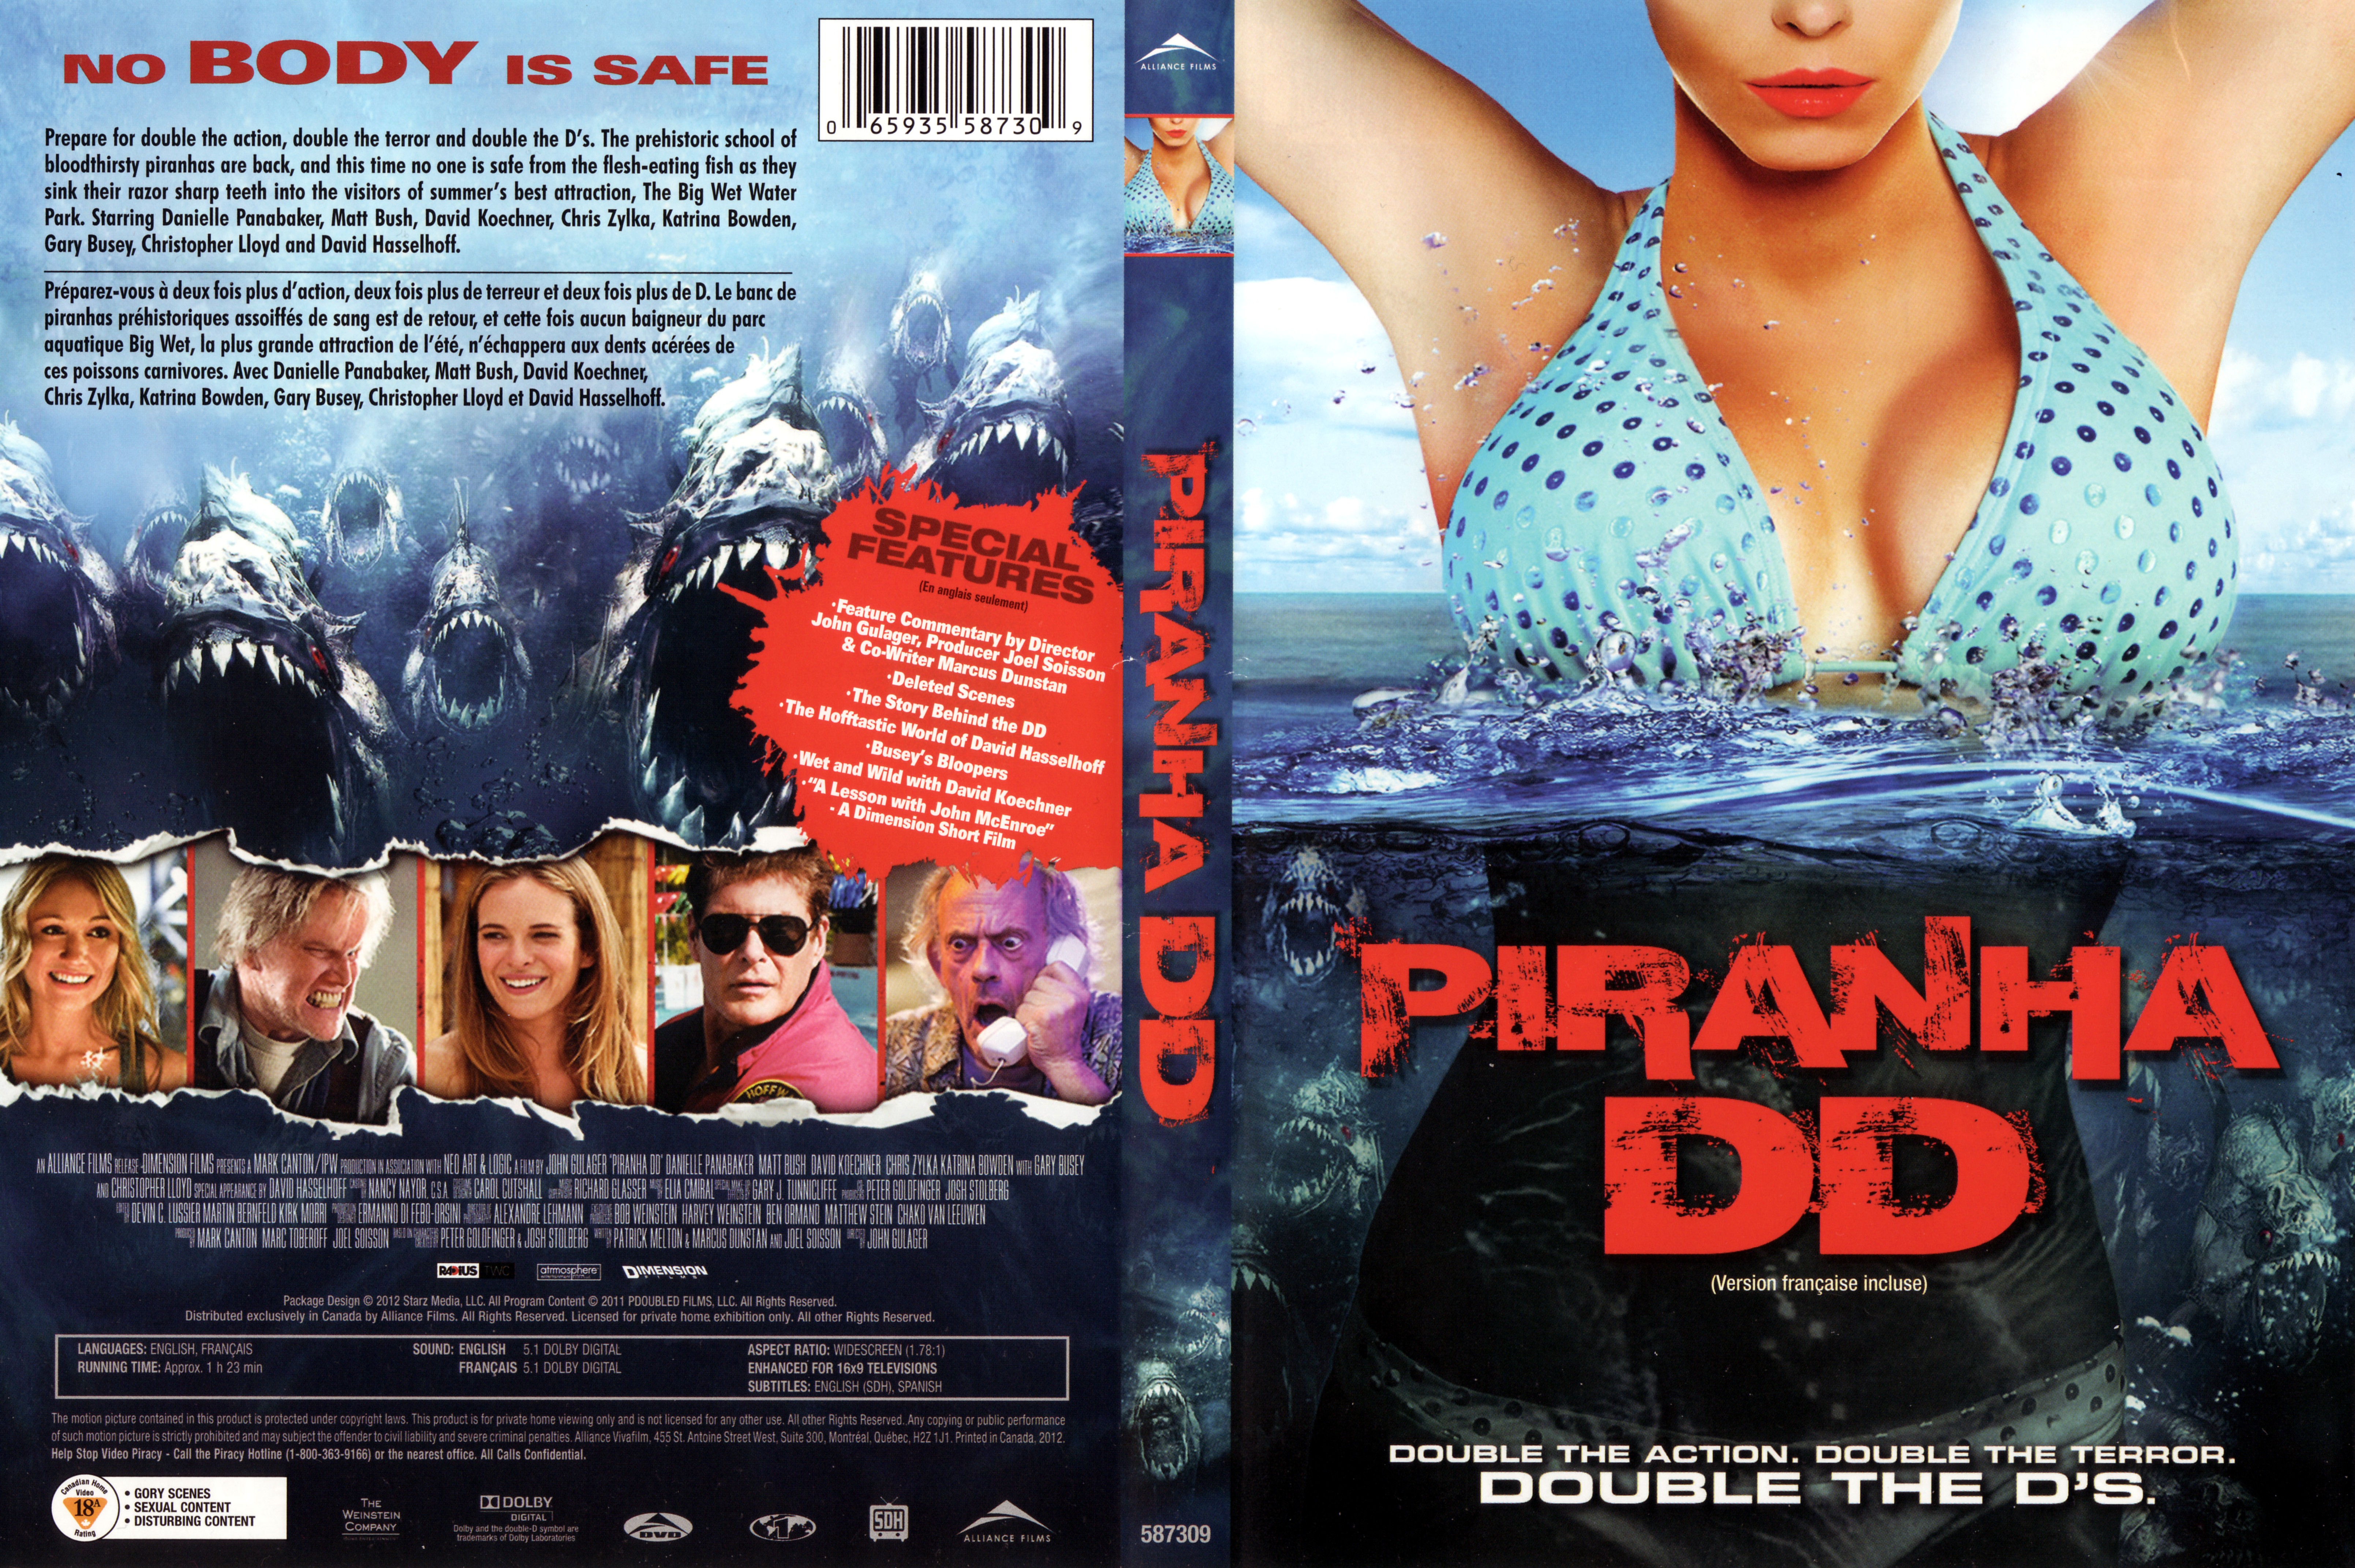 Jaquette DVD Piranha DD (Canadienne) v2